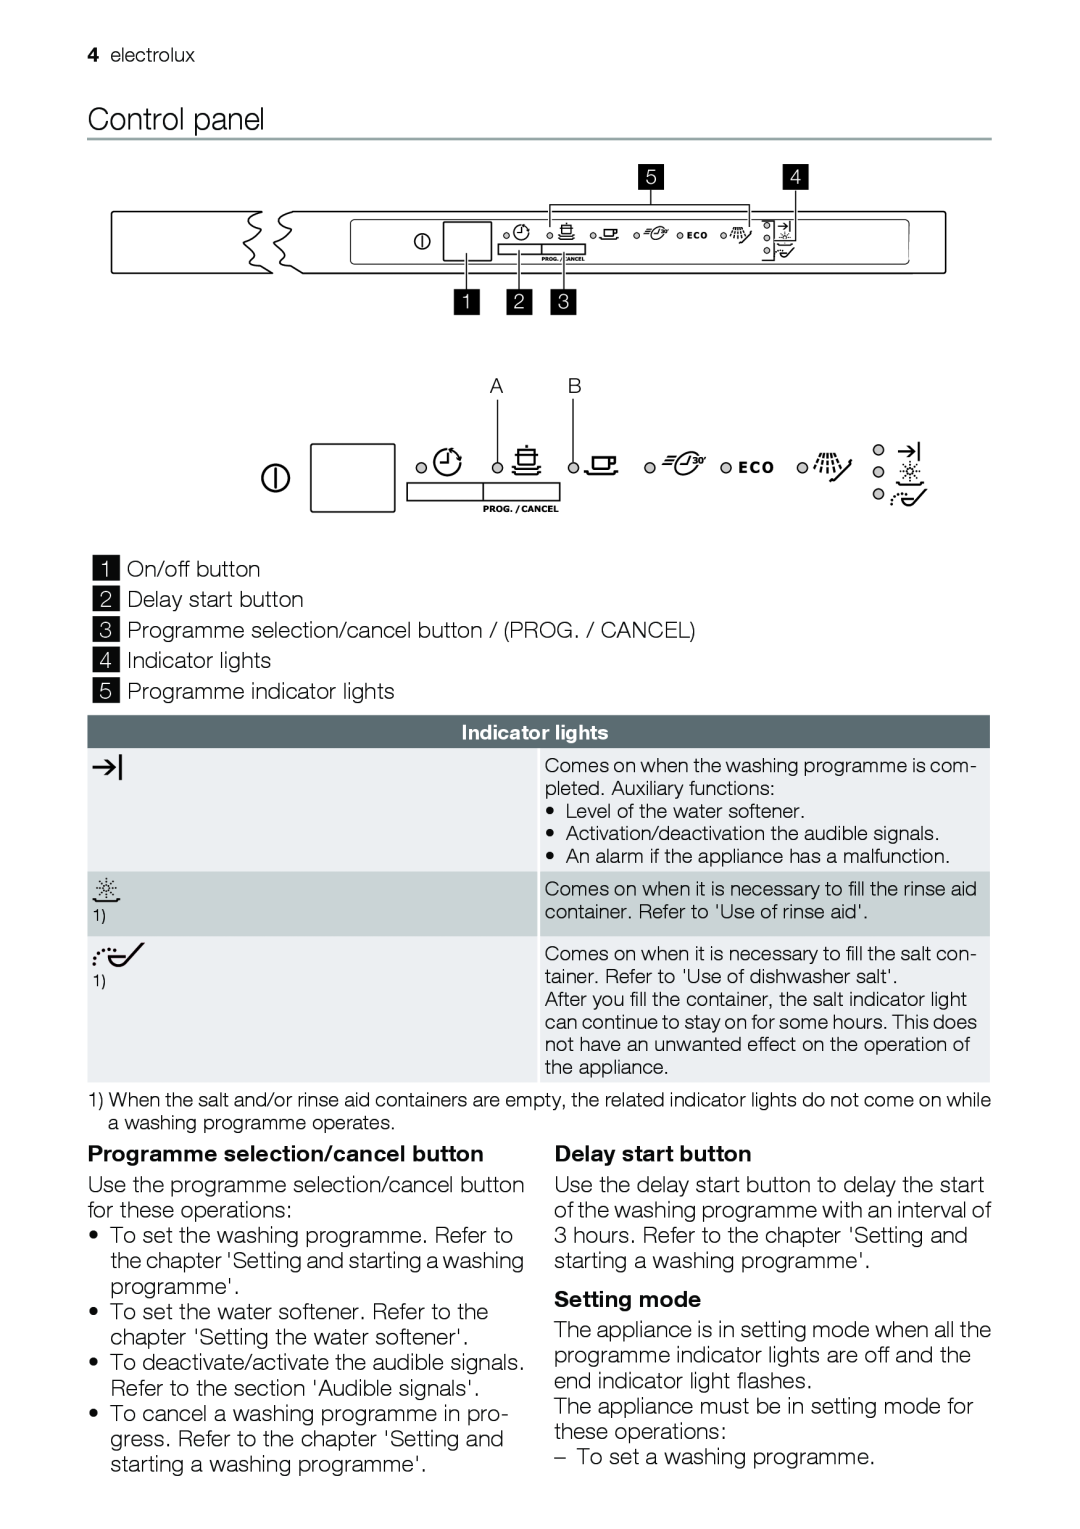 Epson ESL63010 Control panel, Programme selection/cancel button, Delay start button, Setting mode, Indicator lights 